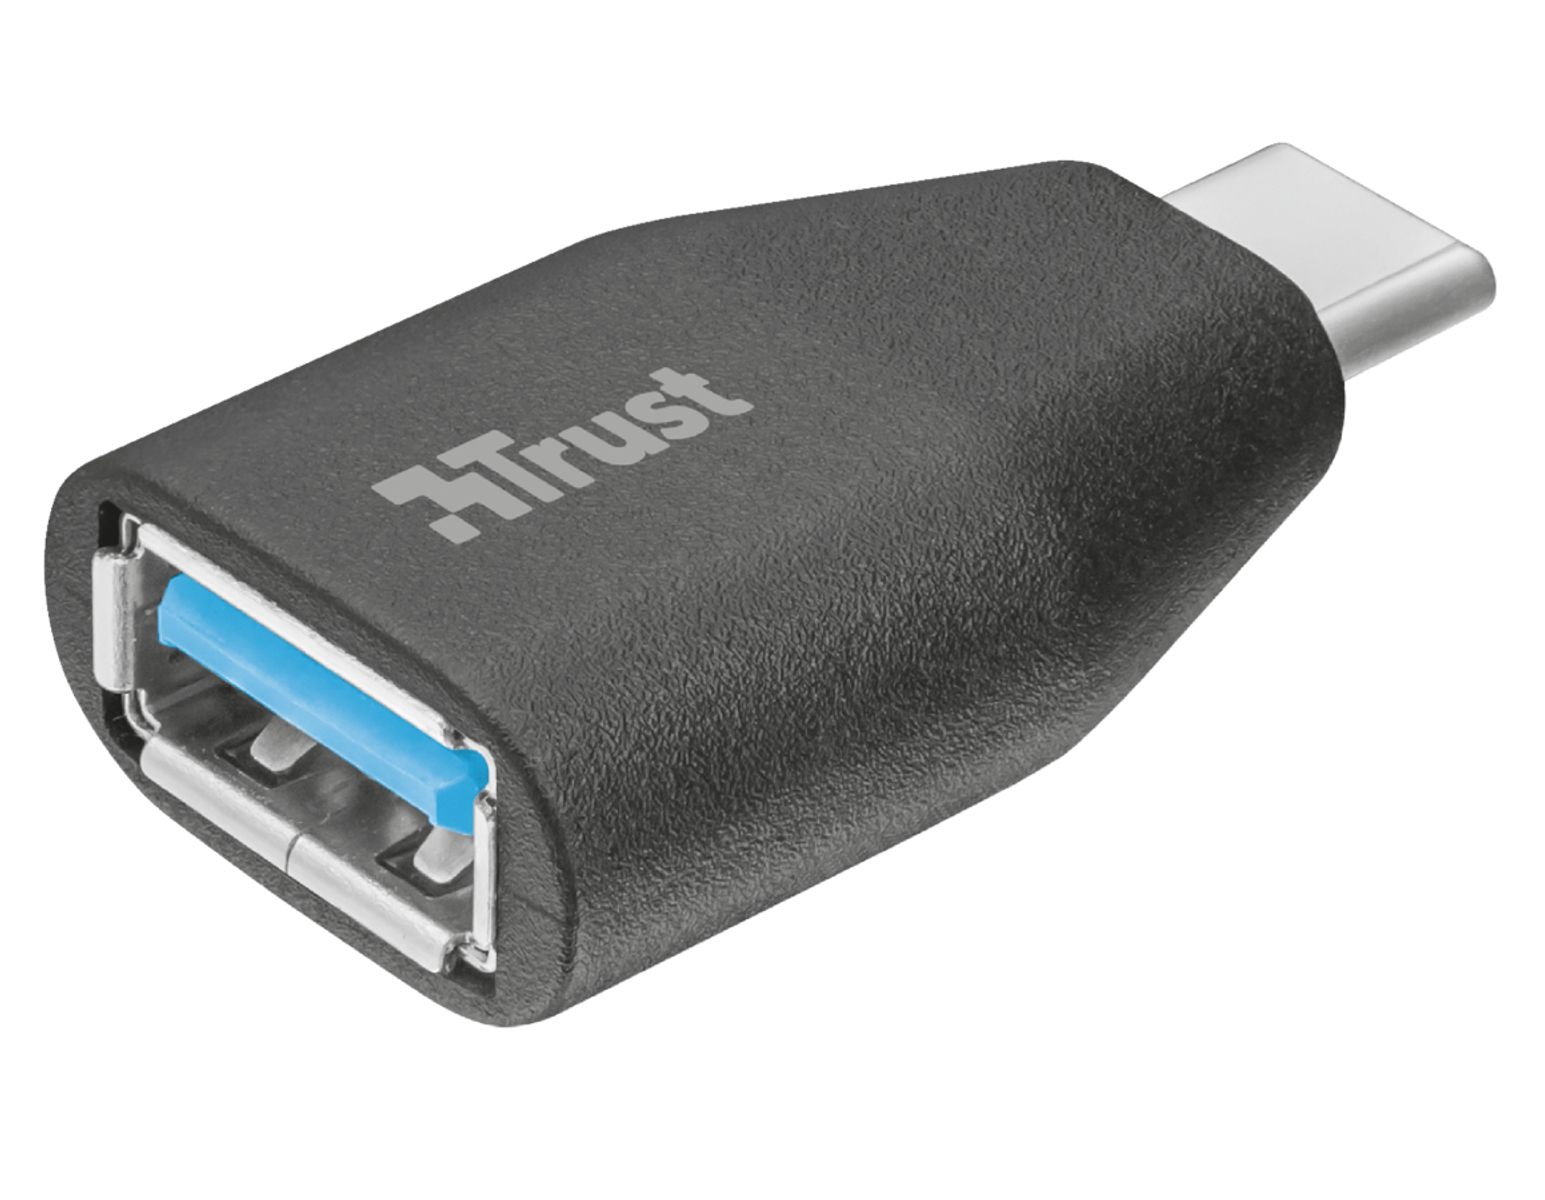 3.1 USB Data Schwarz TRUST USB-C ADAPTER, Adapter, TO 22627 + Video